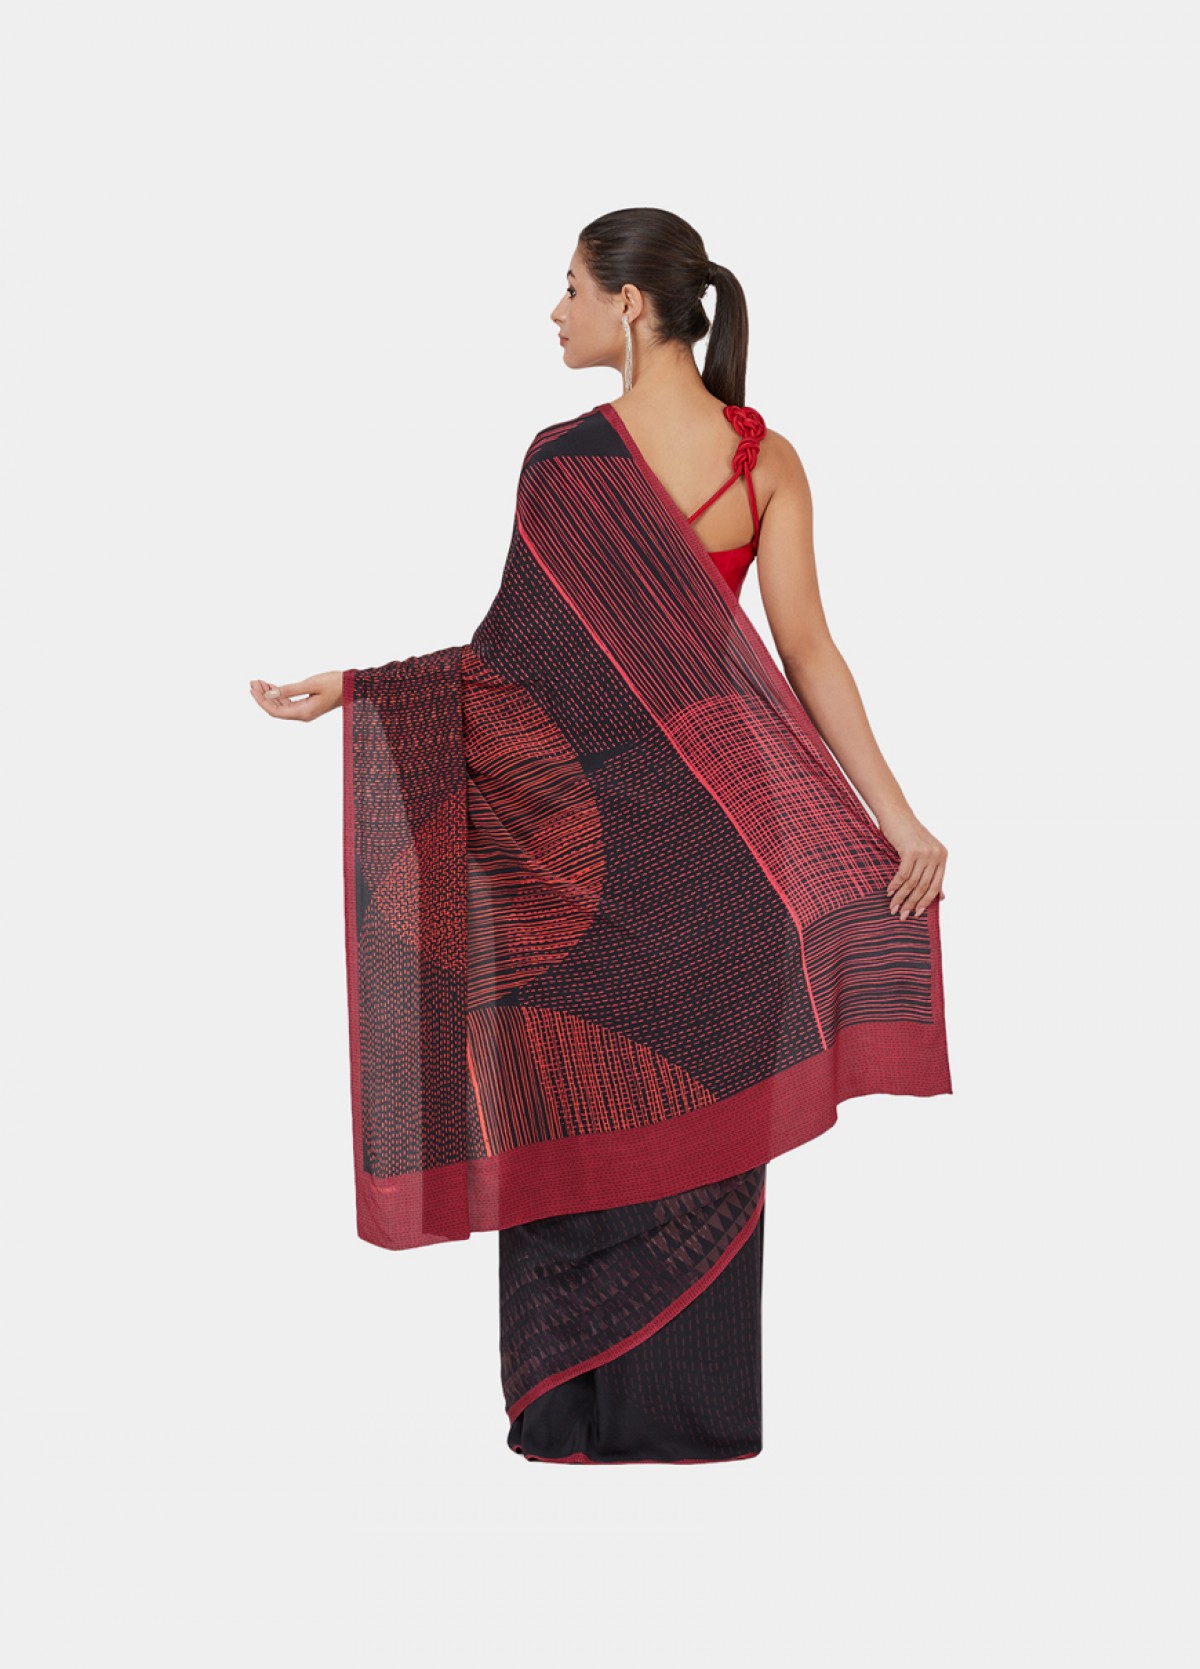 The Transition Sari